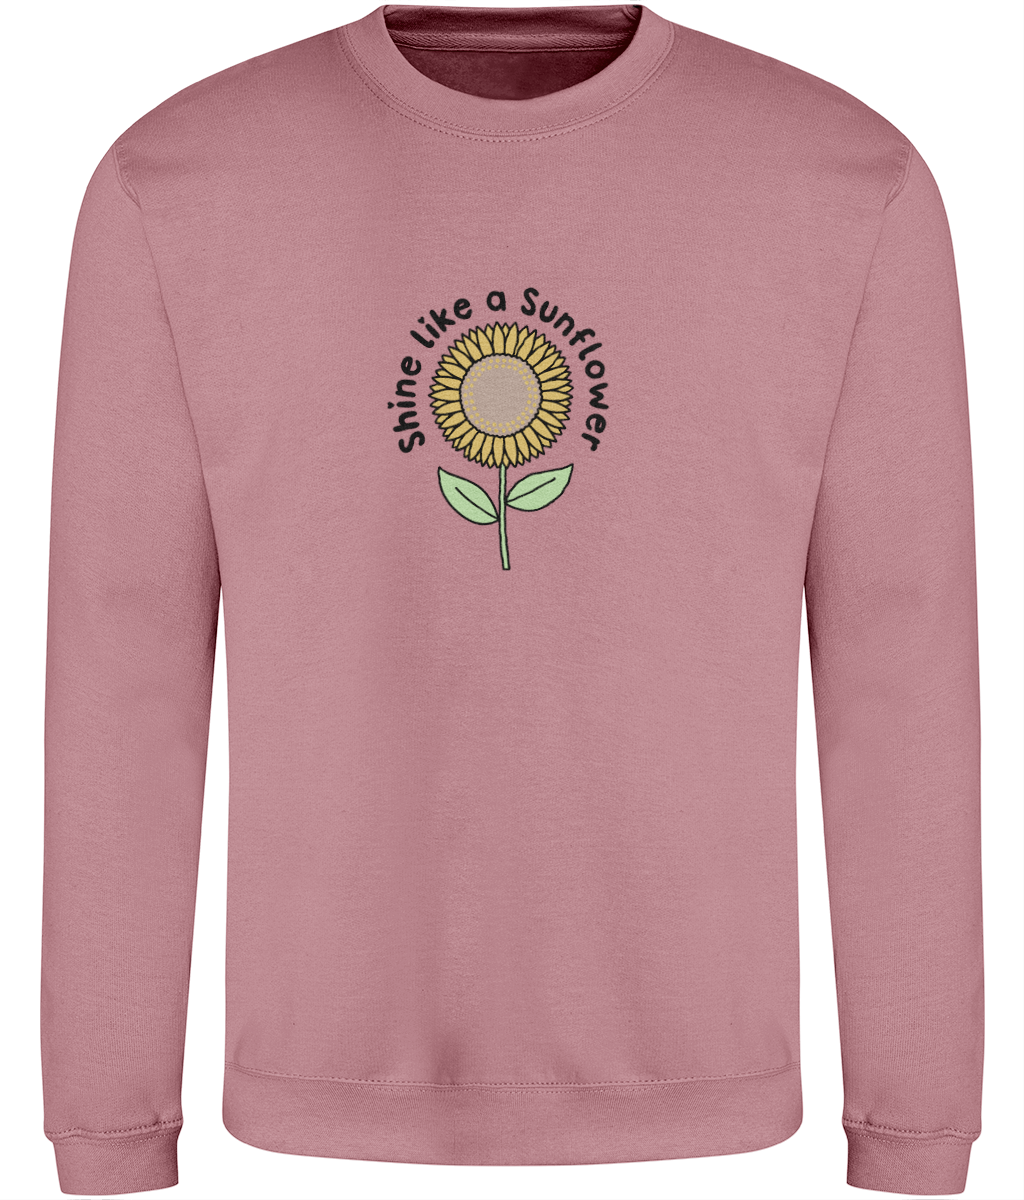 Shine Like A Sunflower - Adult Sweatshirt - Light Multi Colour Options